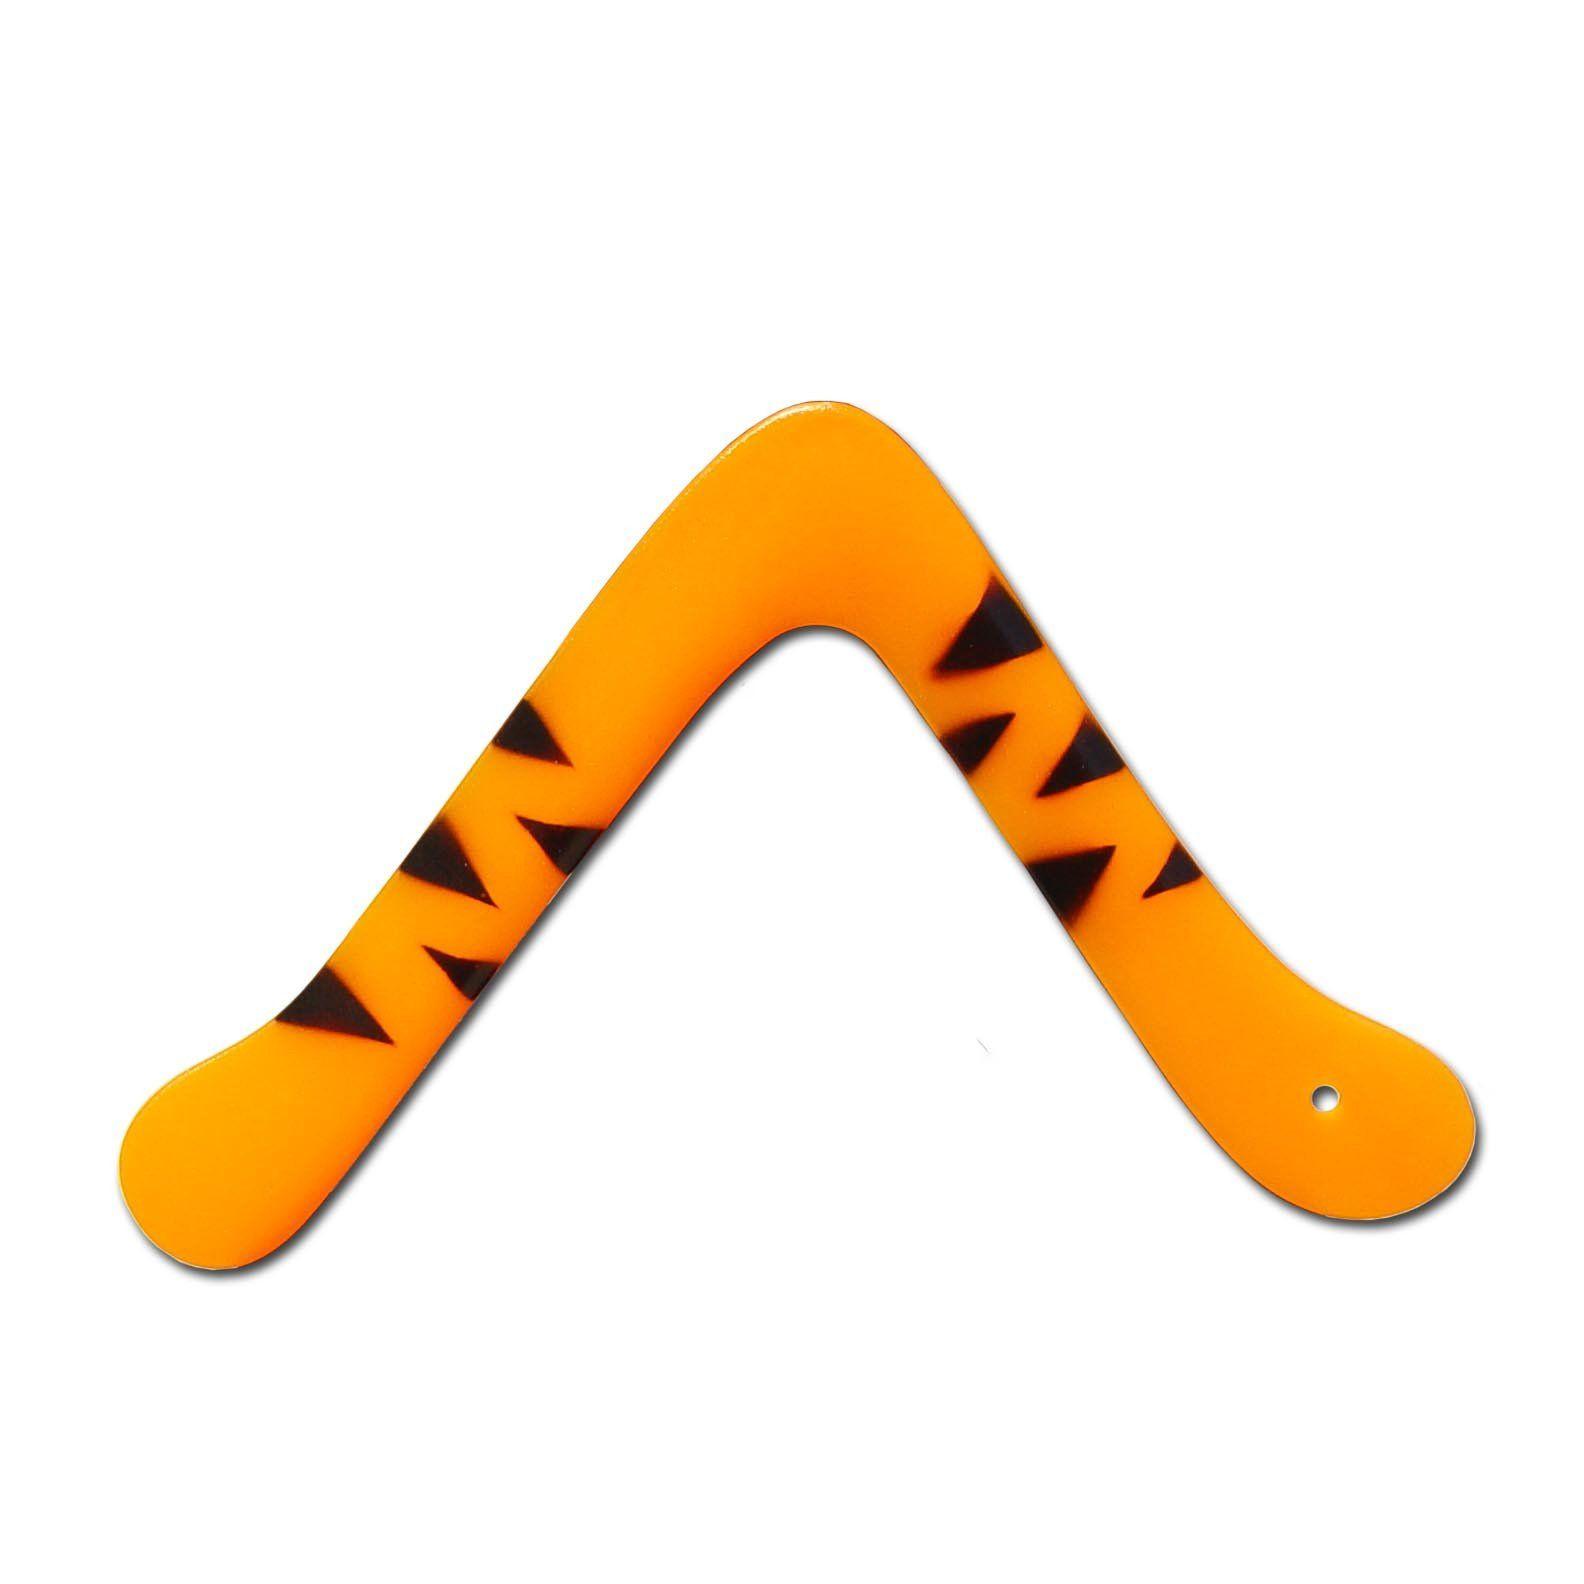 Boomerang V Logo - Boomerangs.com - Buy a Boomerang and Learn How to Throw a Boomerang